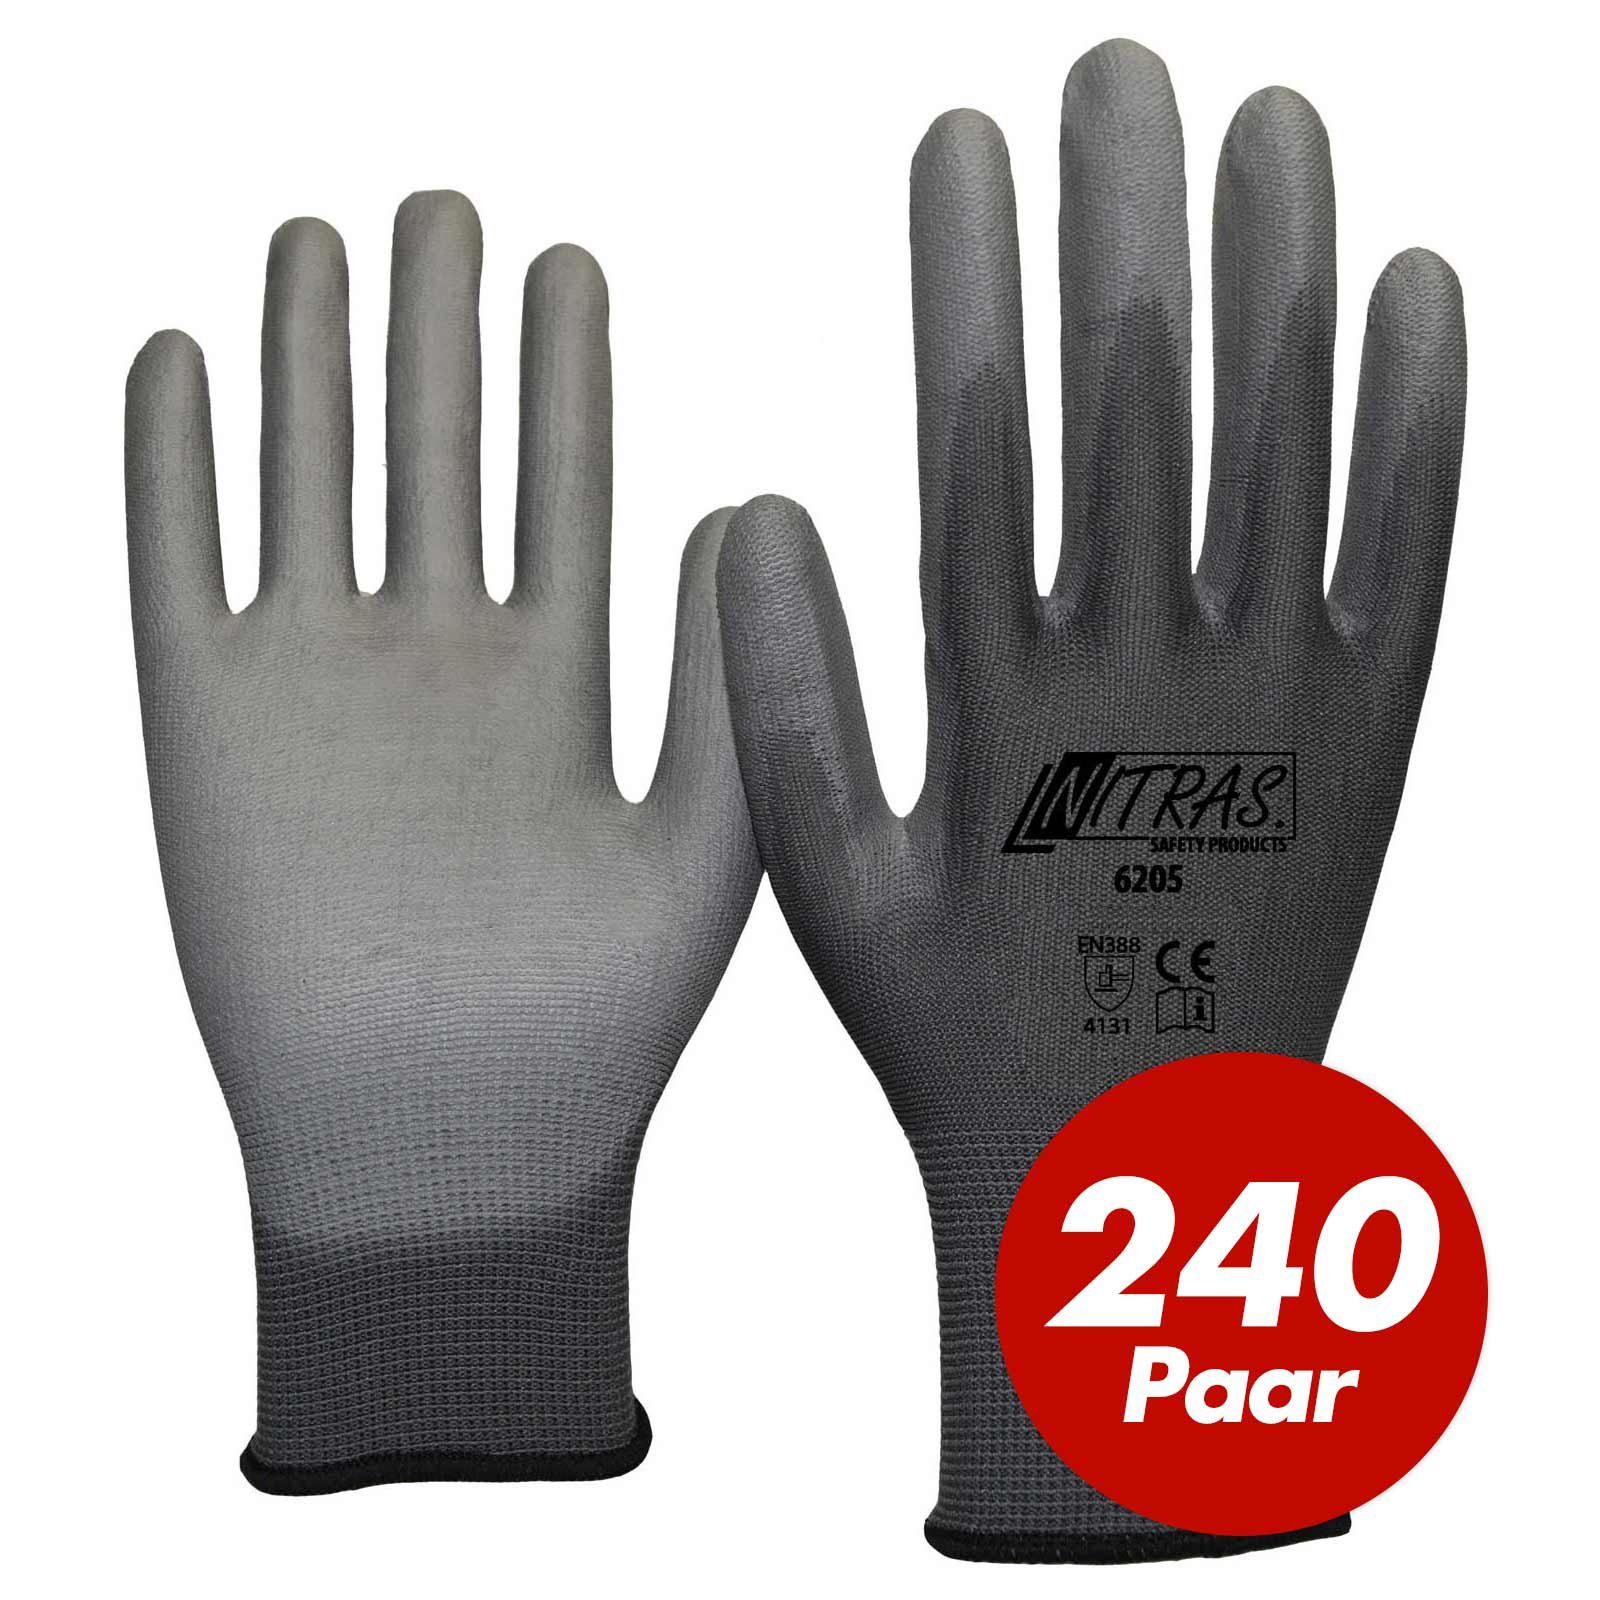 Nitras Nitril-Handschuhe NITRAS 6205 Nylon Strickhandschuh grau, Gartenhandschuhe - 240 Paar (Spar-Set)